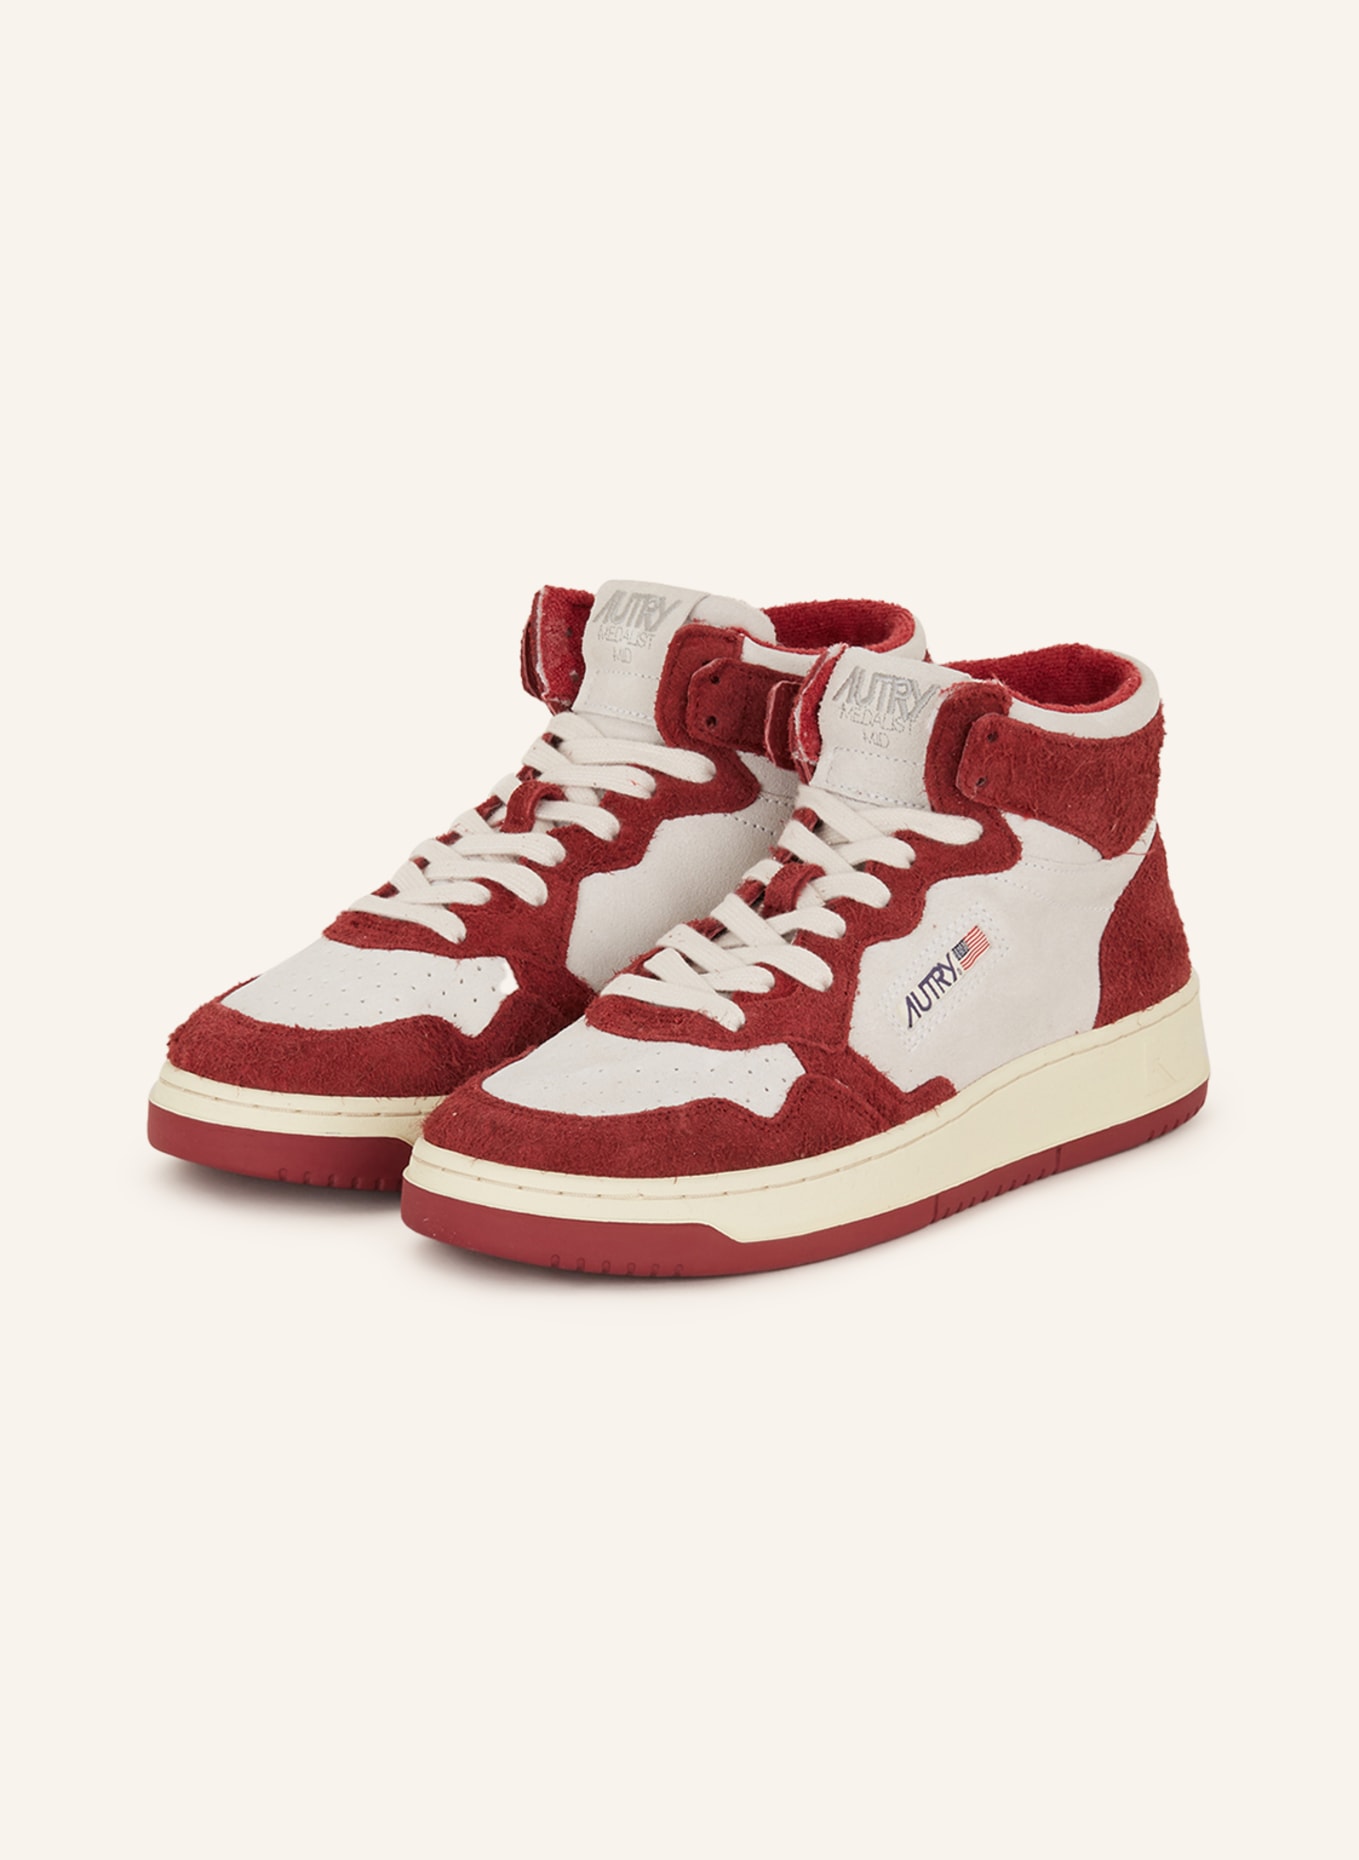 AUTRY Hightop-Sneaker MEDALIST, Farbe: CREME/ DUNKELROT (Bild 1)